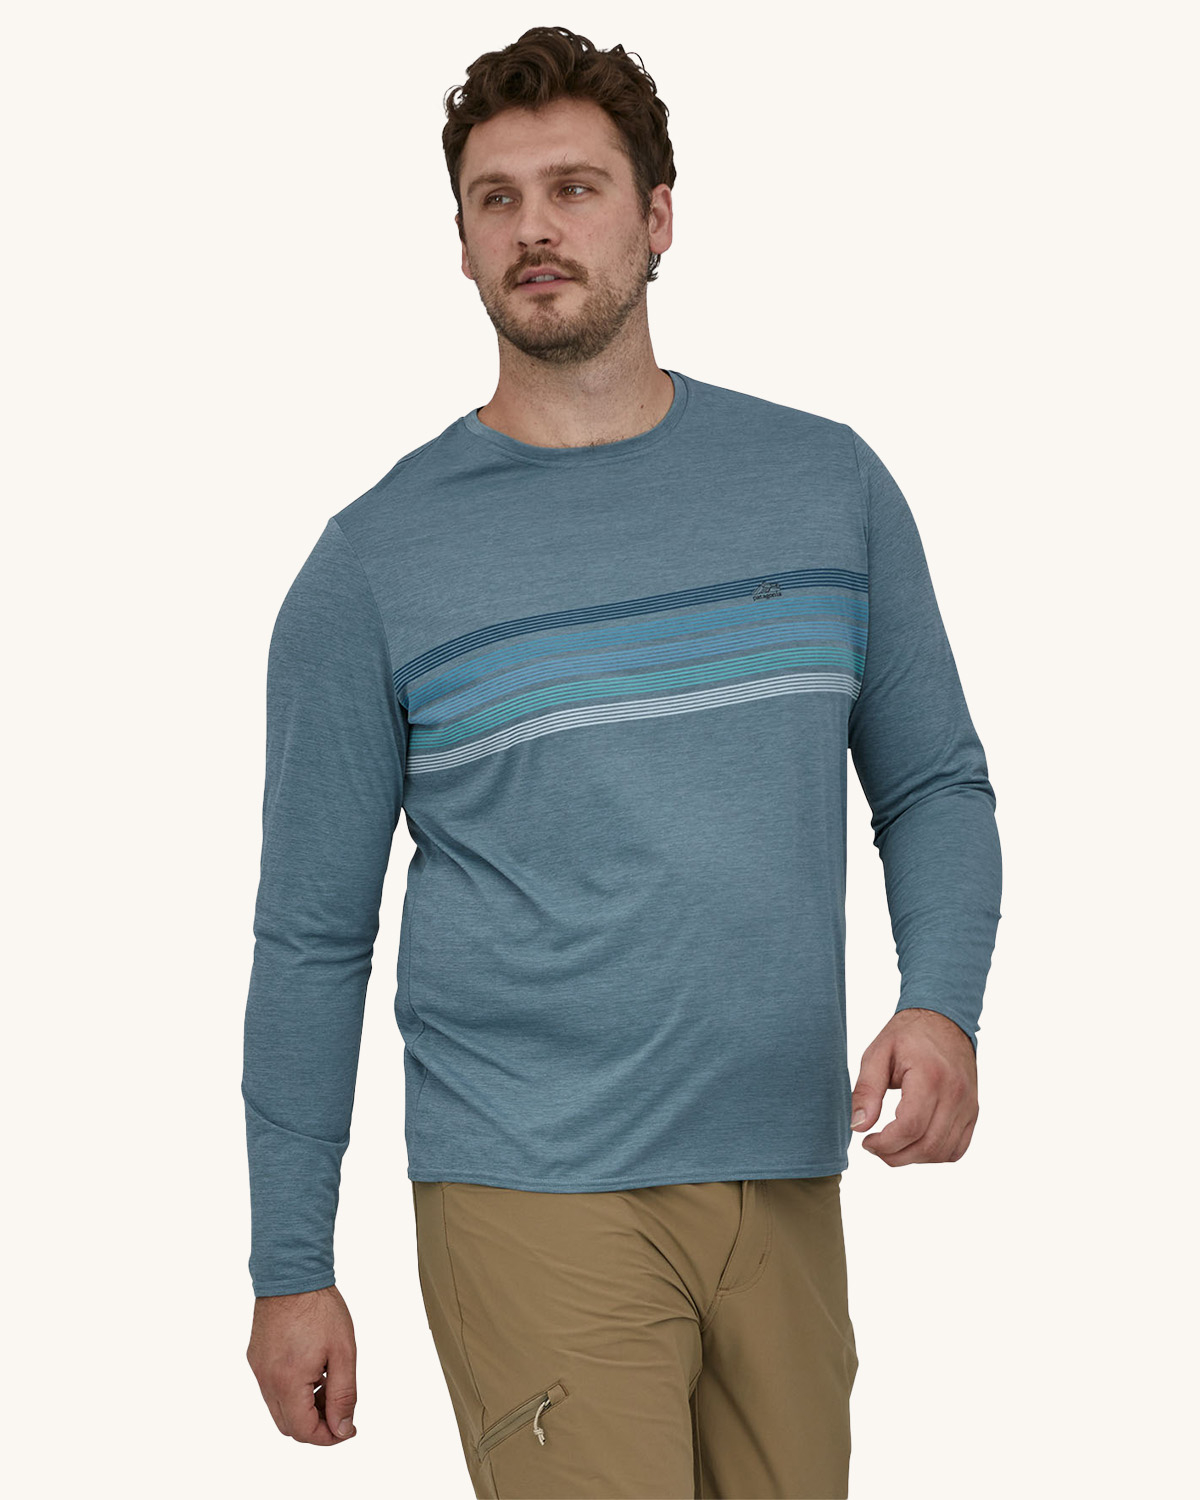 Patagonia Long-Sleeved Cap Cool Daily Graphic Shirt - Unity Fitz / Buckhorn Green X Dye - M - Men